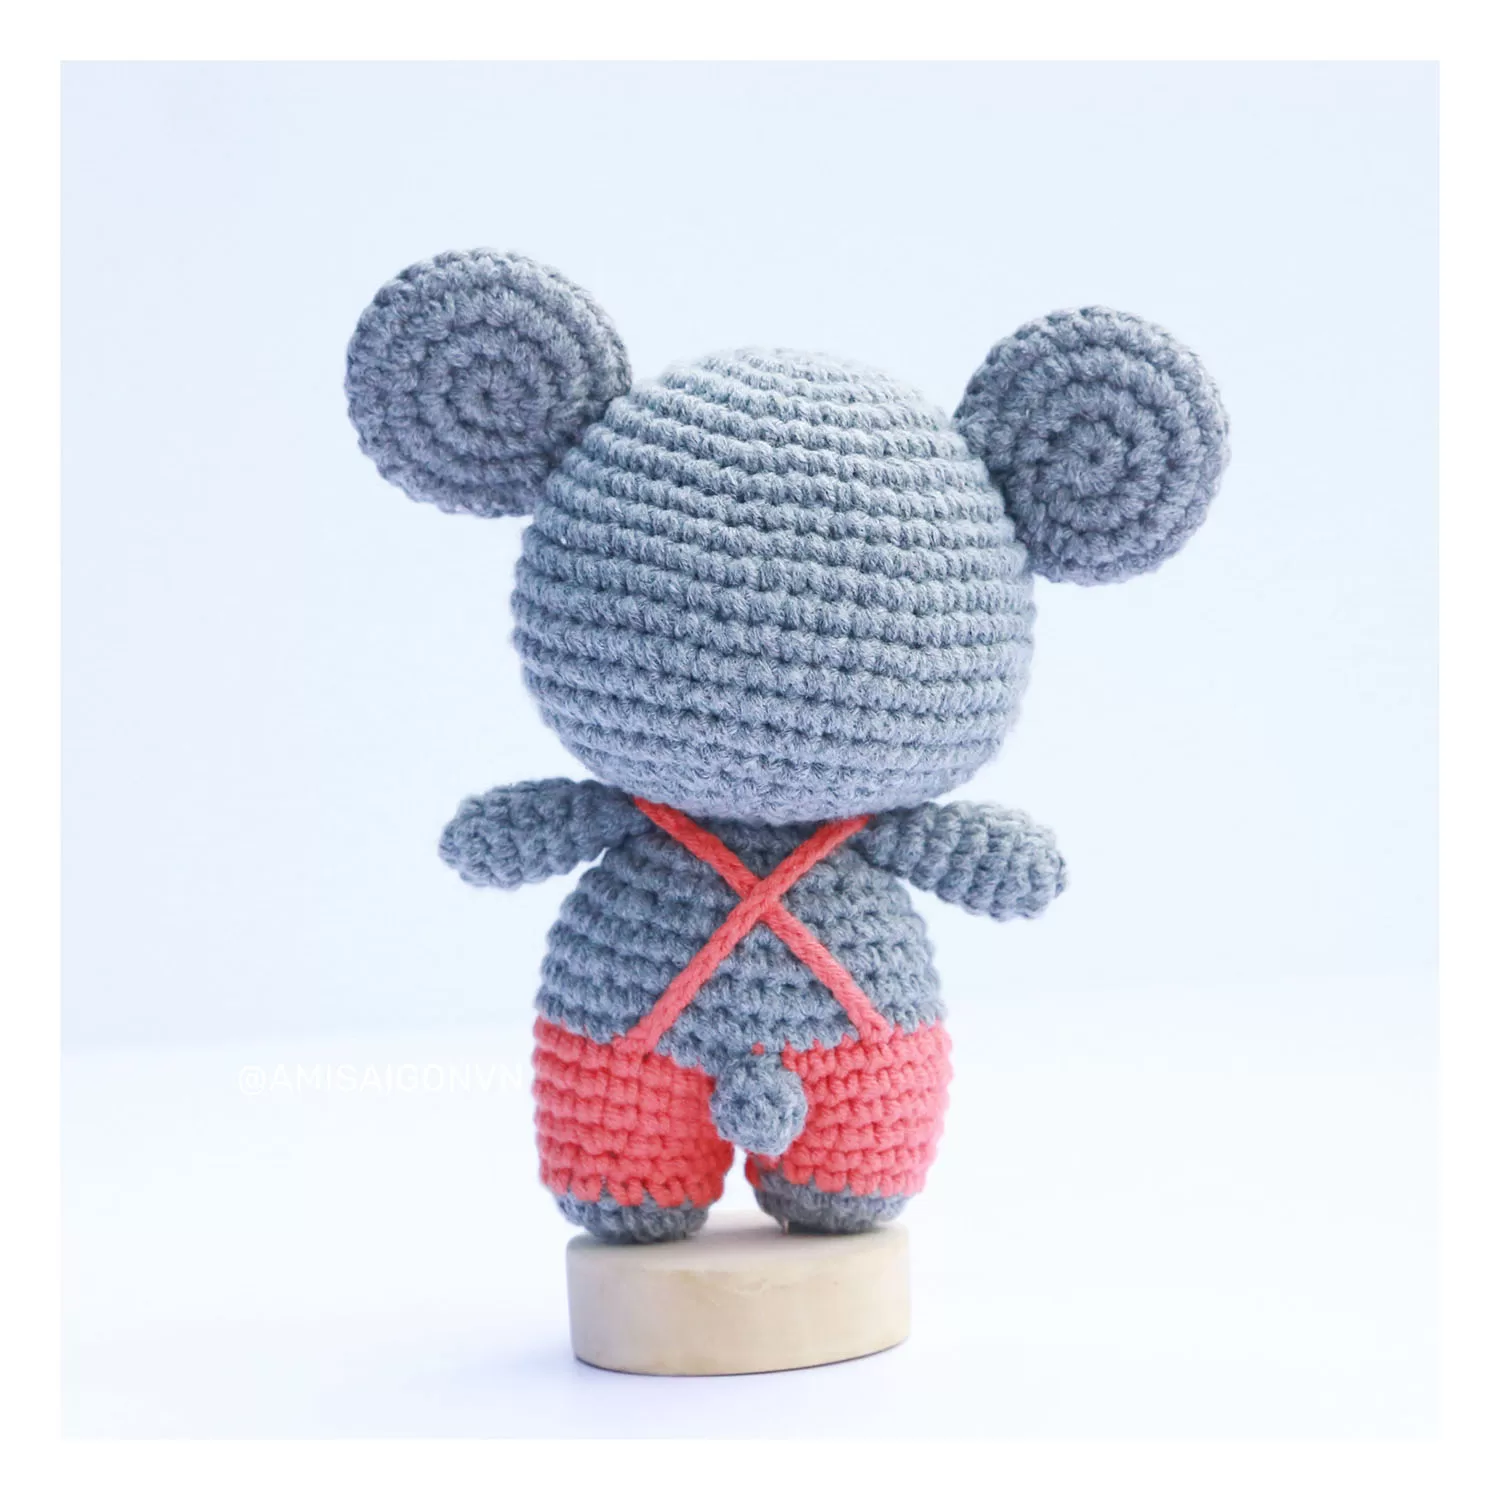 Koala Amigurumi | Crochet Pattern | Amigurumi Tutorial PDF in English | AmiSaigon